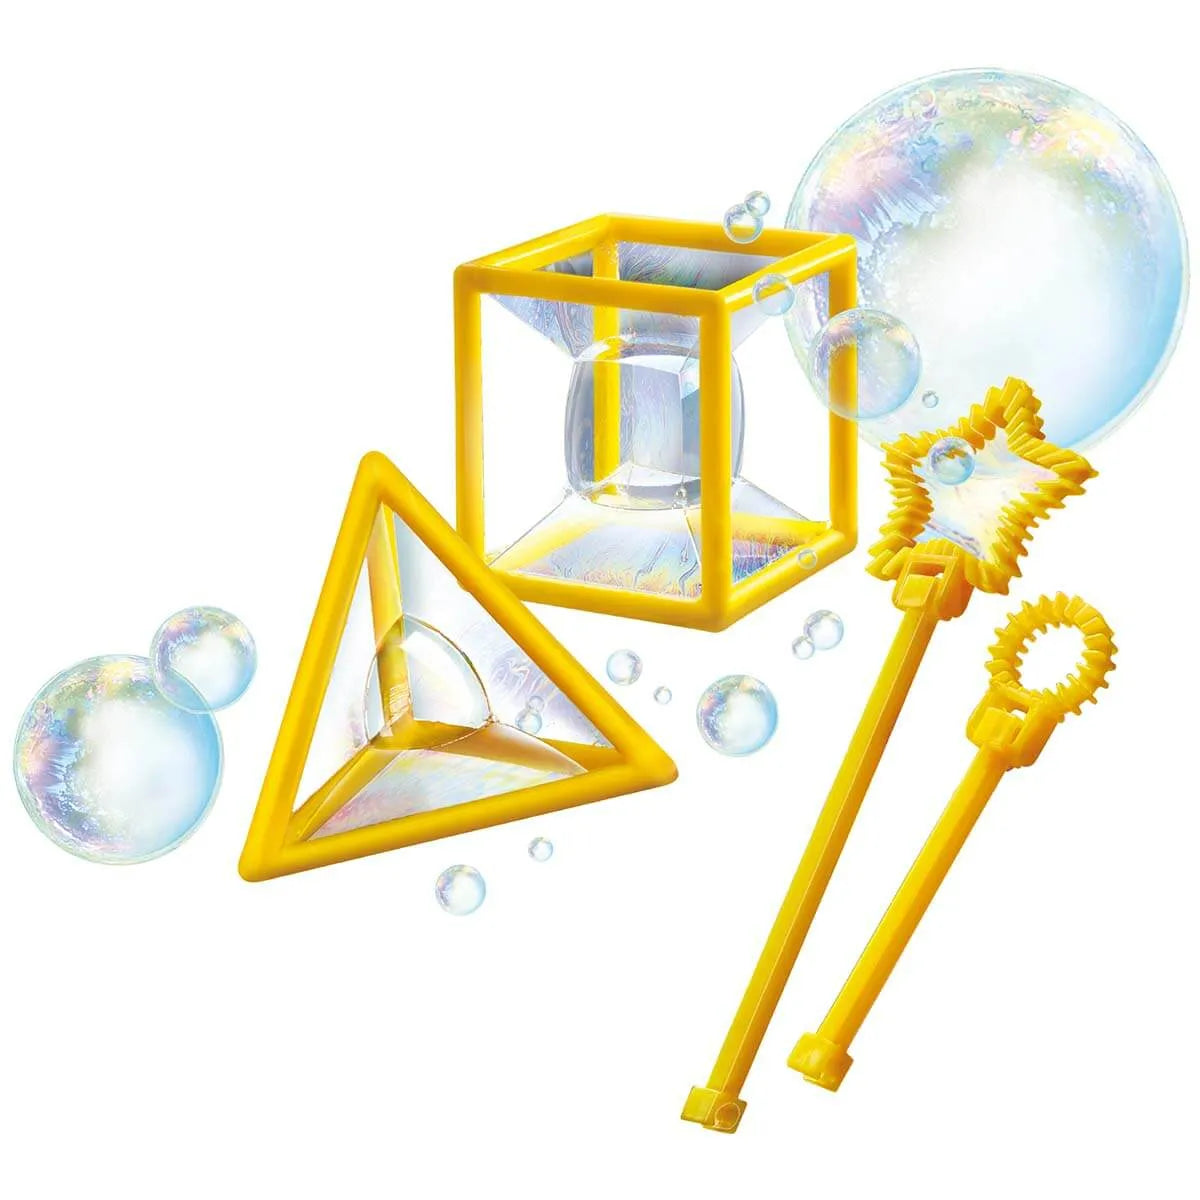 4M Bubble Science Kit - science kits for kids - stem toys for children